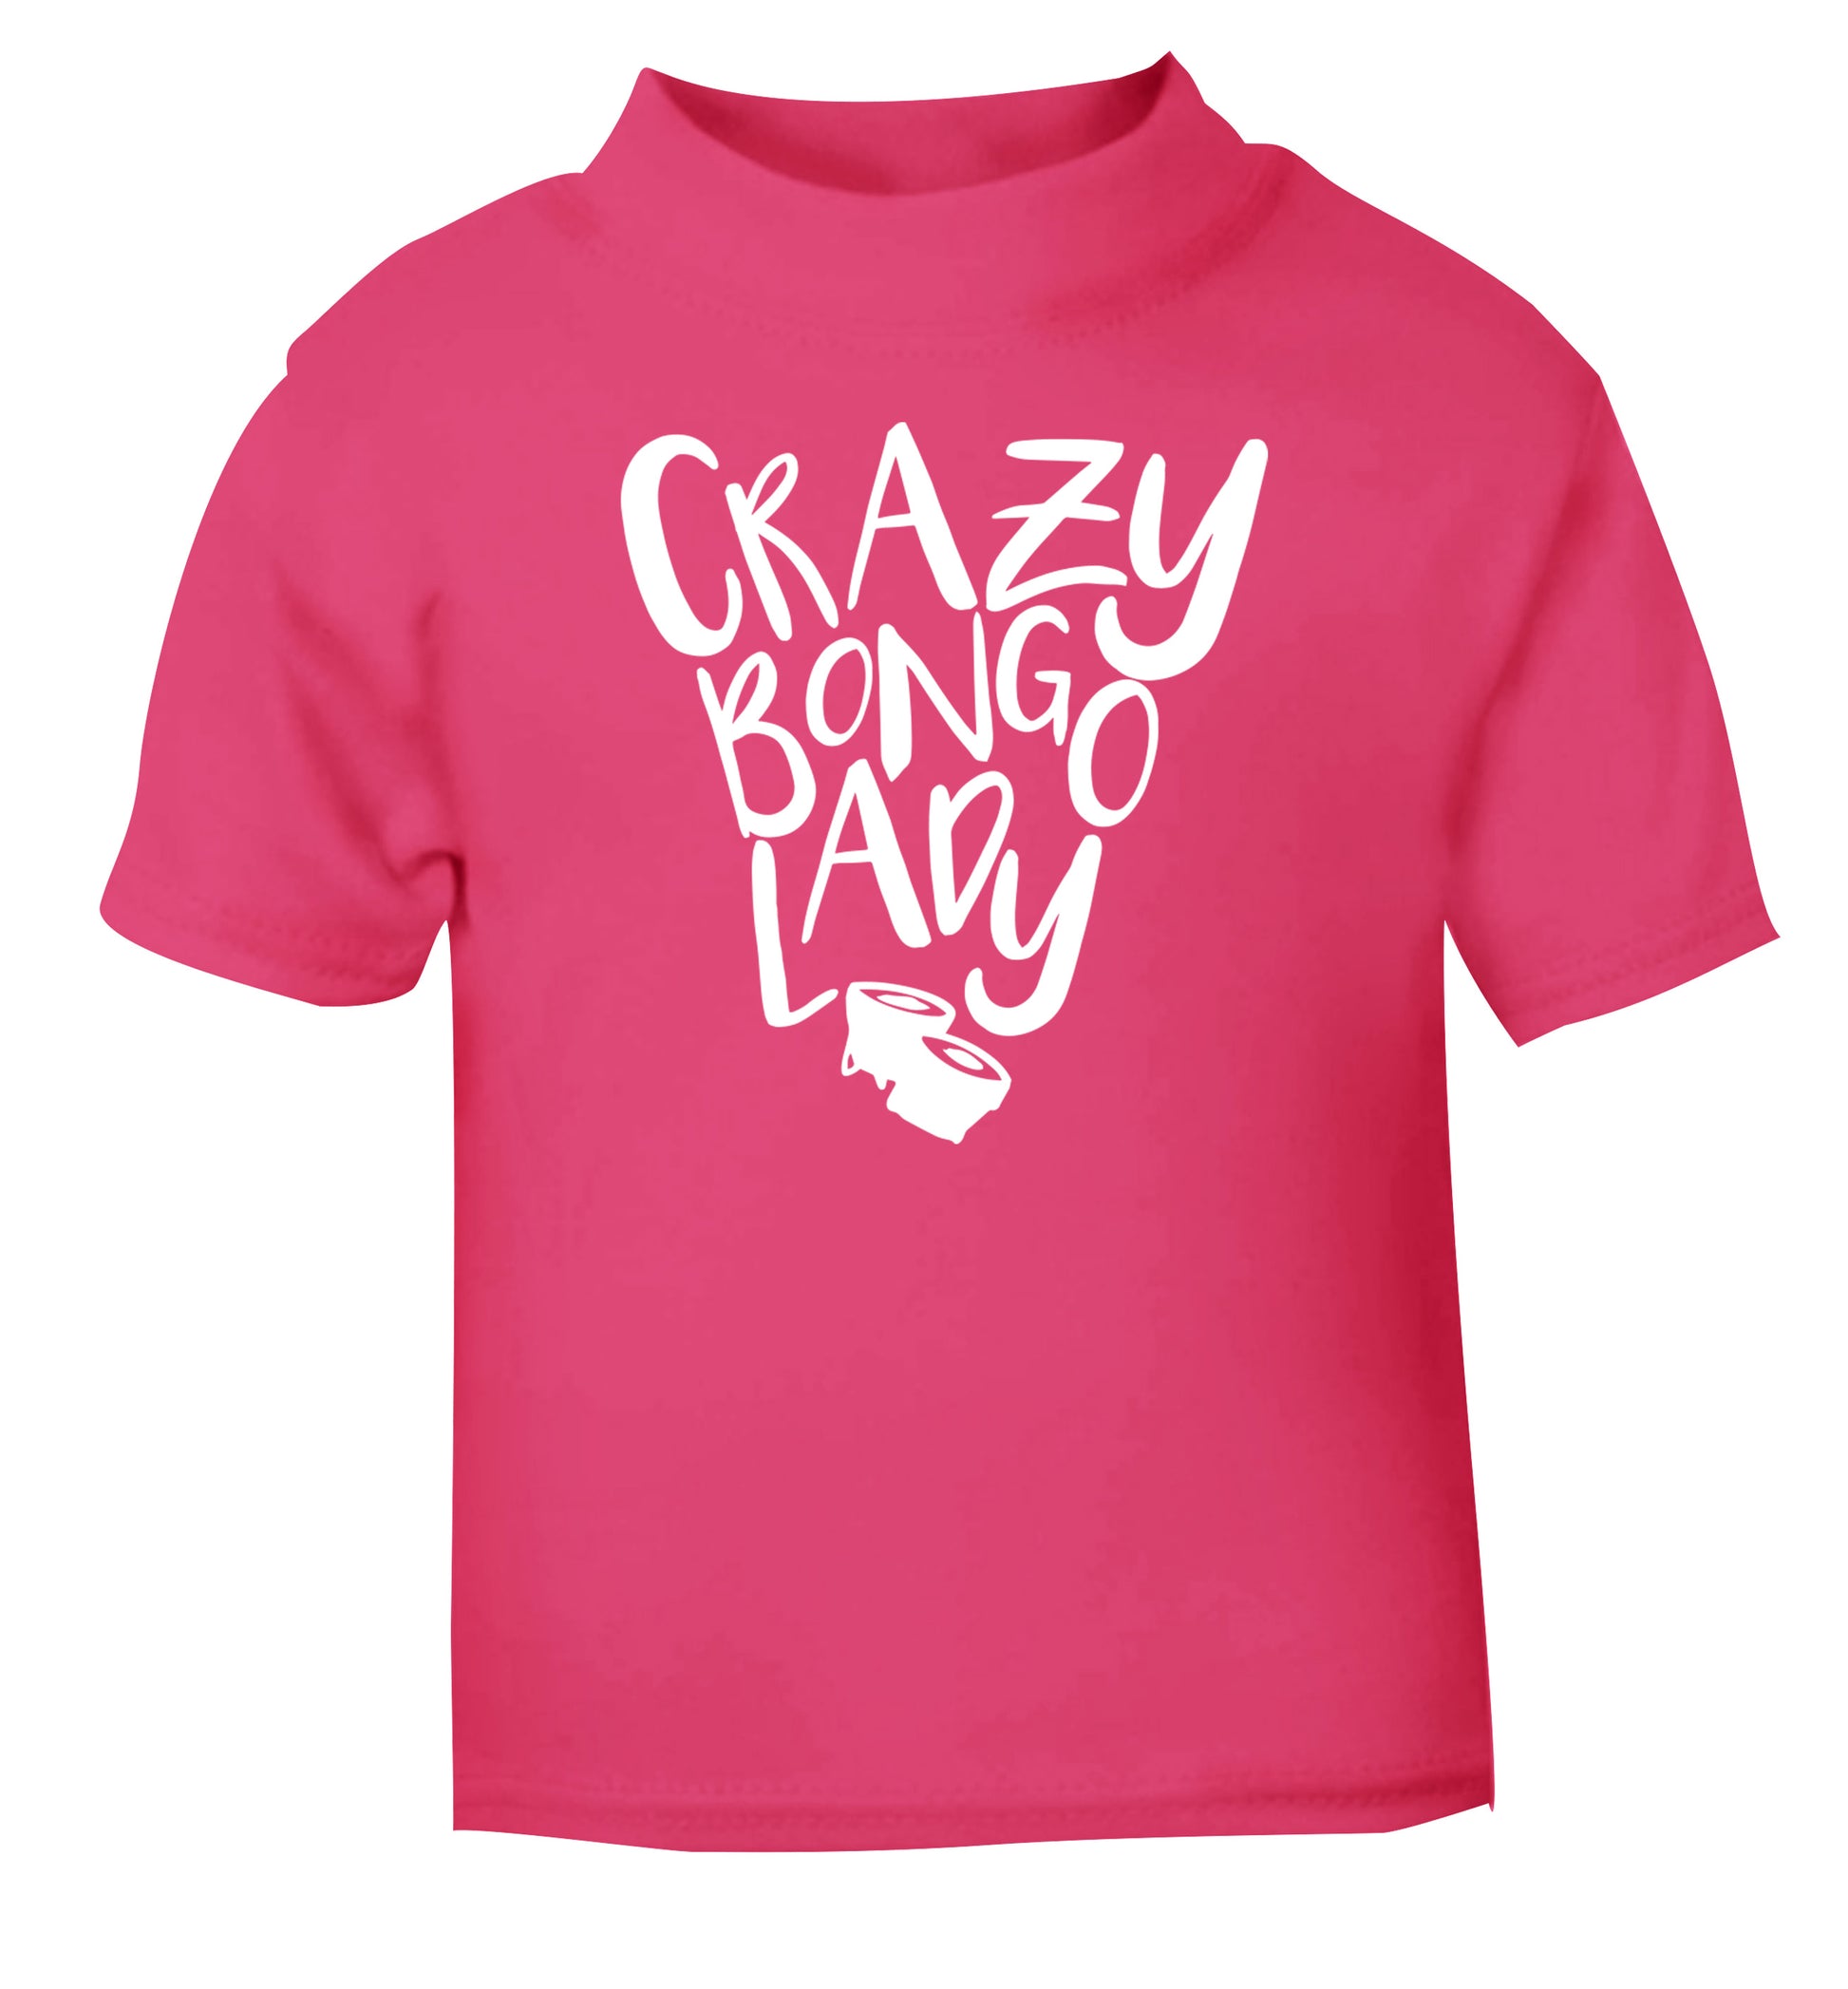 Crazy bongo lady pink Baby Toddler Tshirt 2 Years